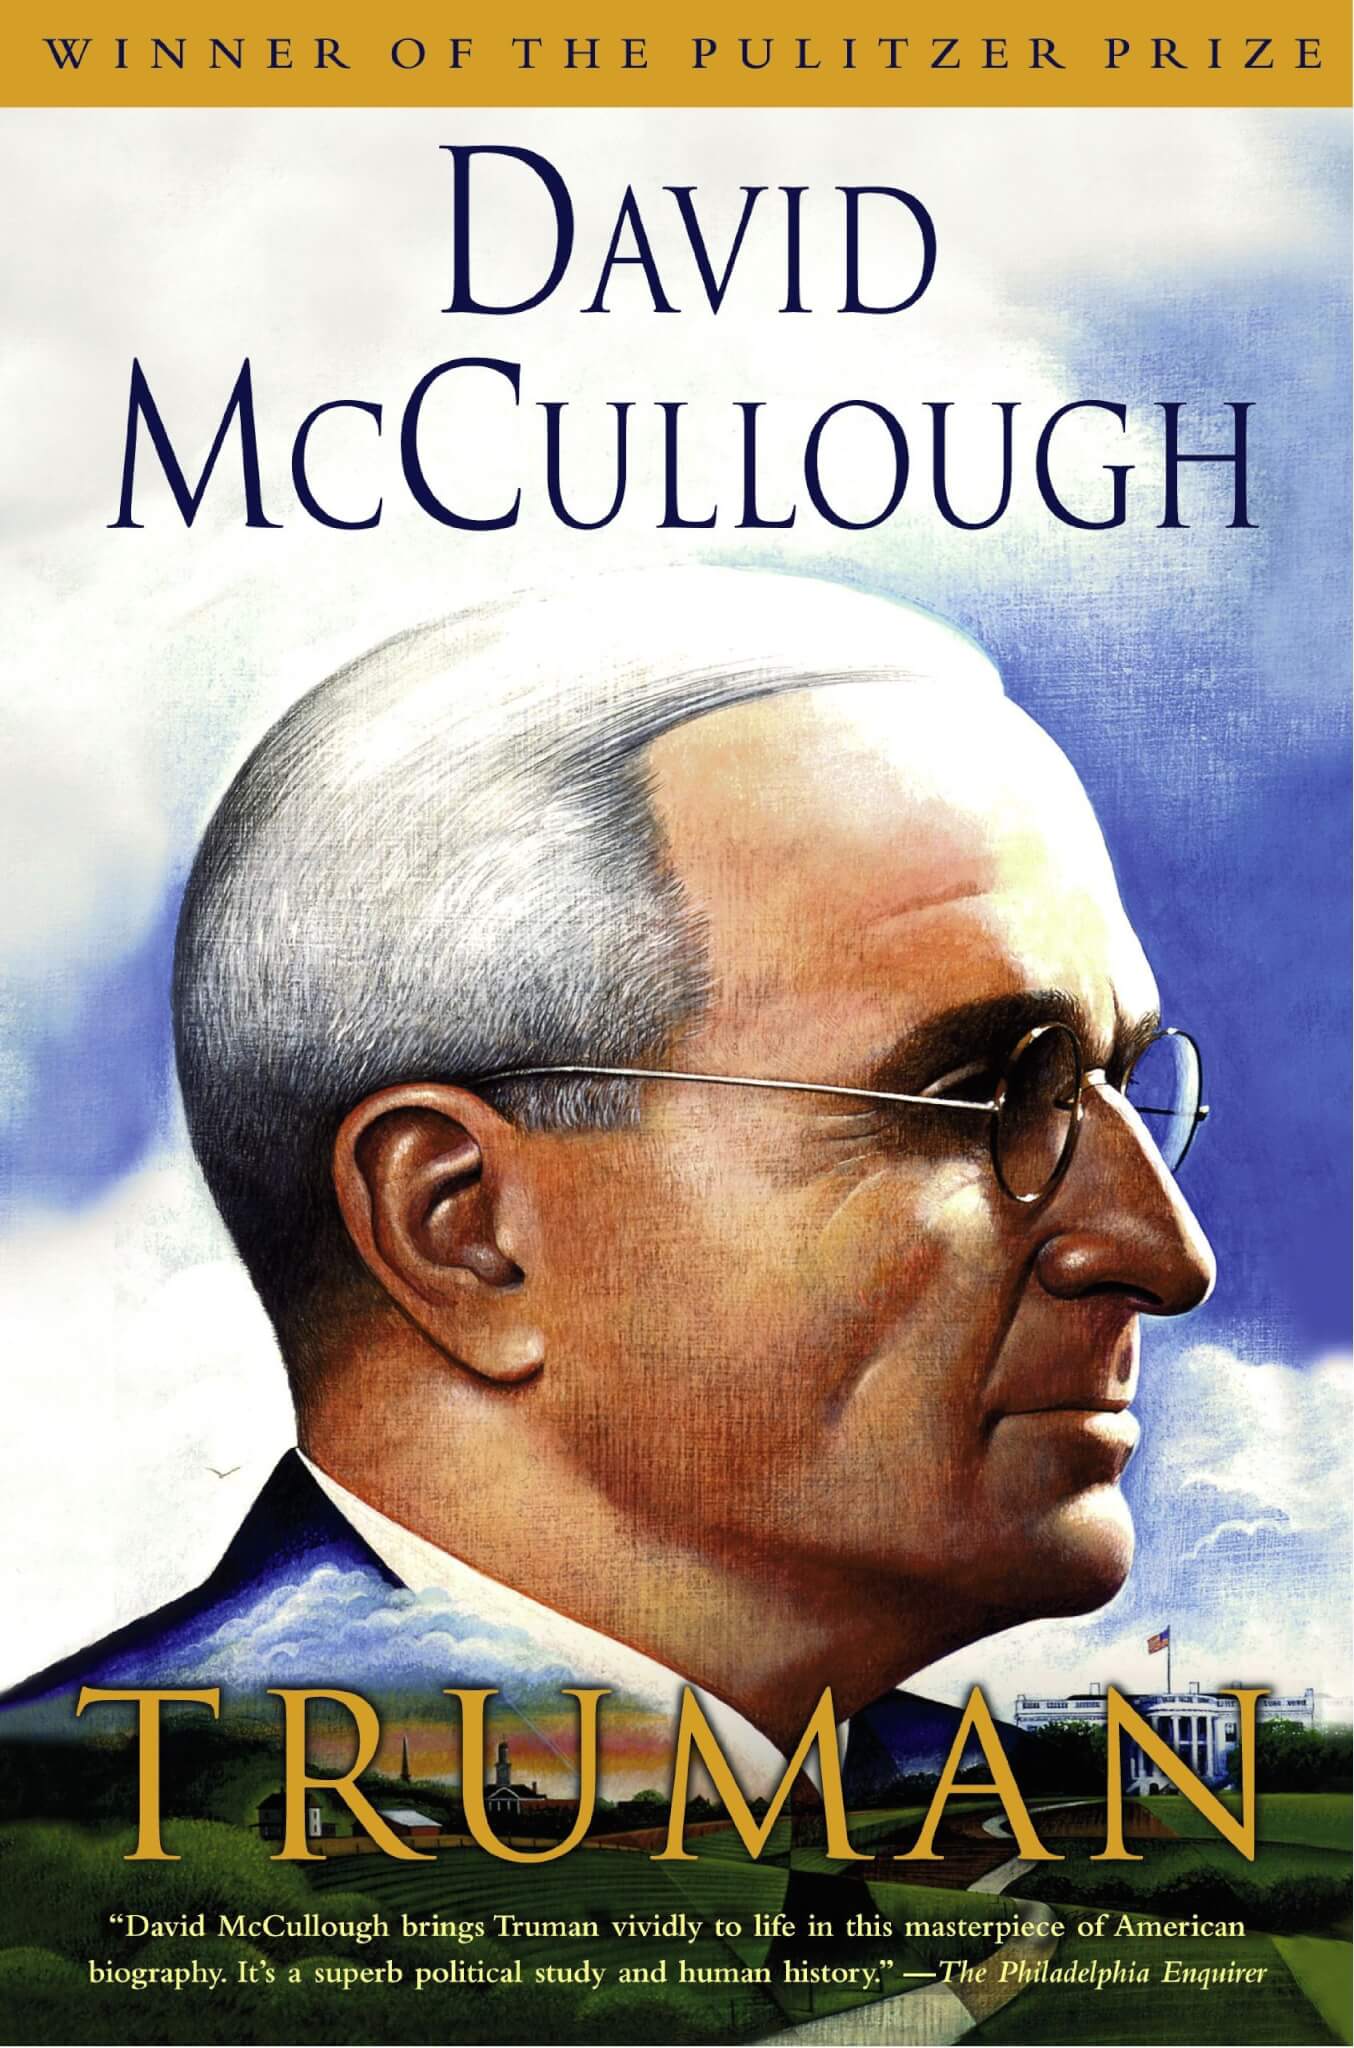 "Truman" by David McCullough